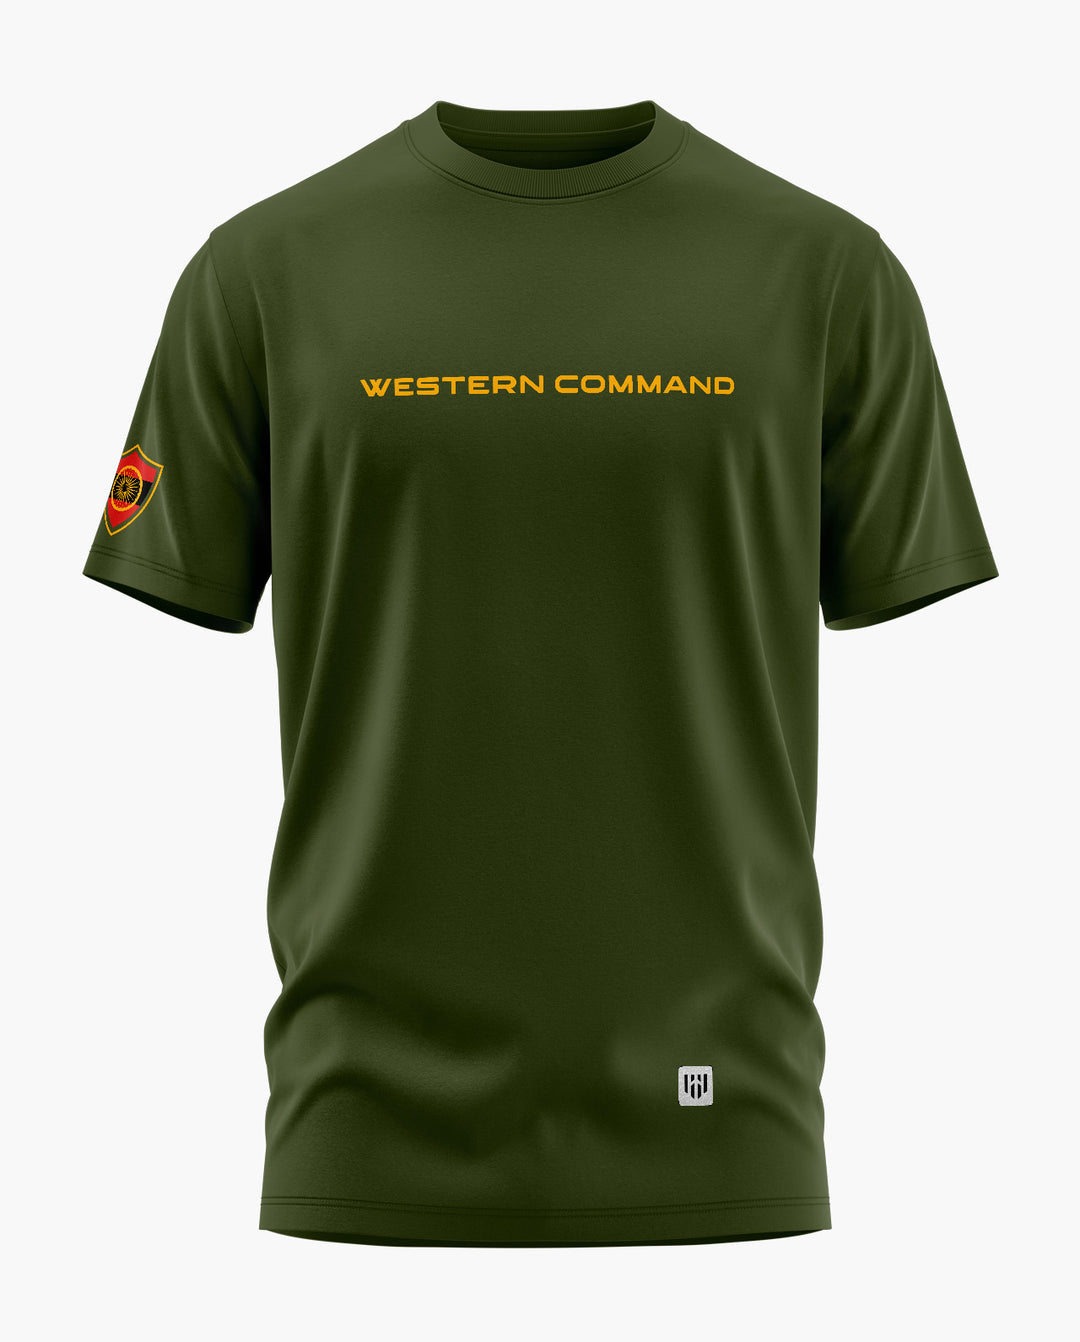 WESTERN COMMAND T-Shirt